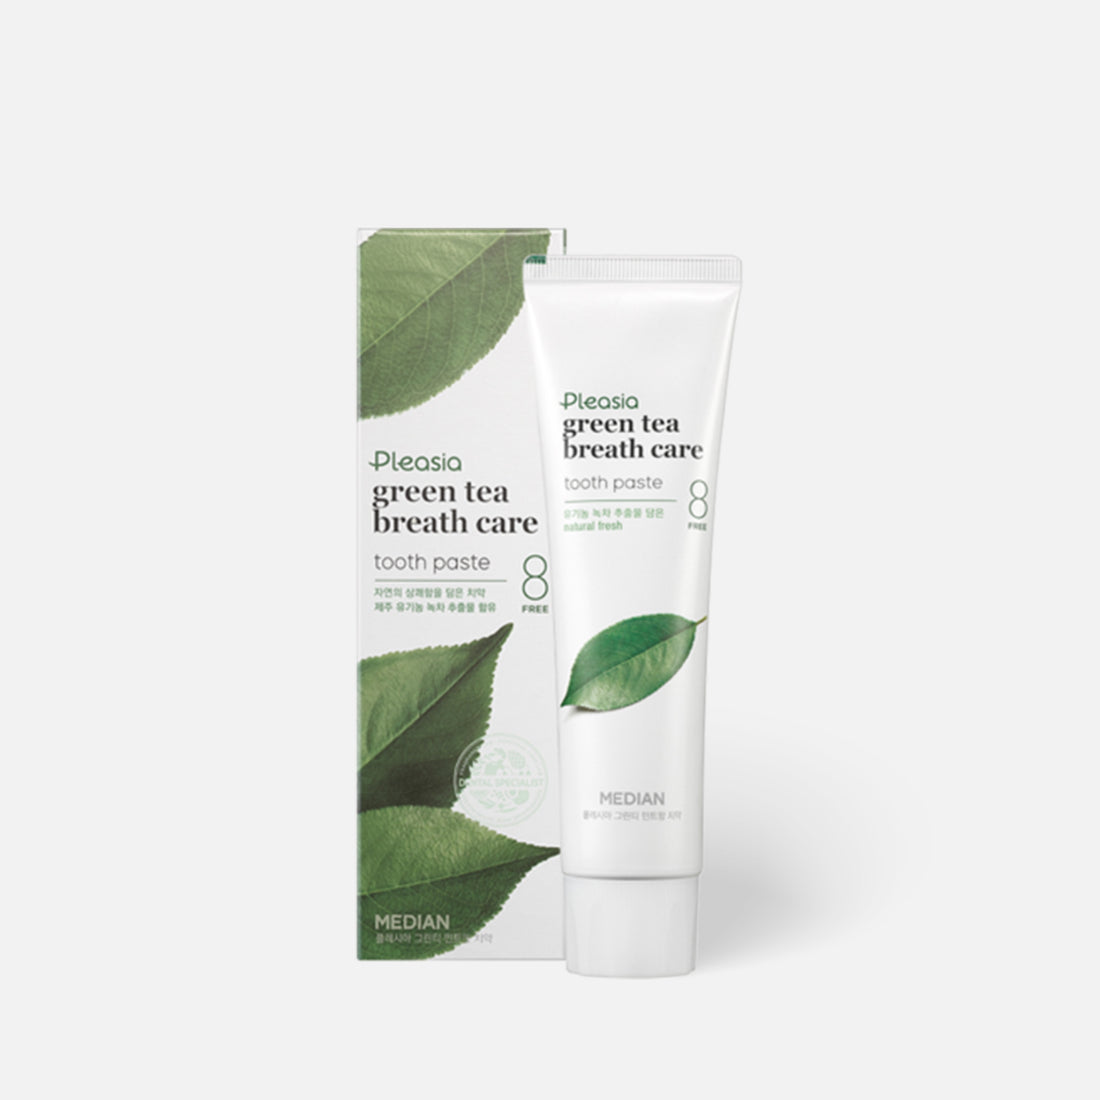 MEDIAN pleasia green tea breath care toothpaste 120g